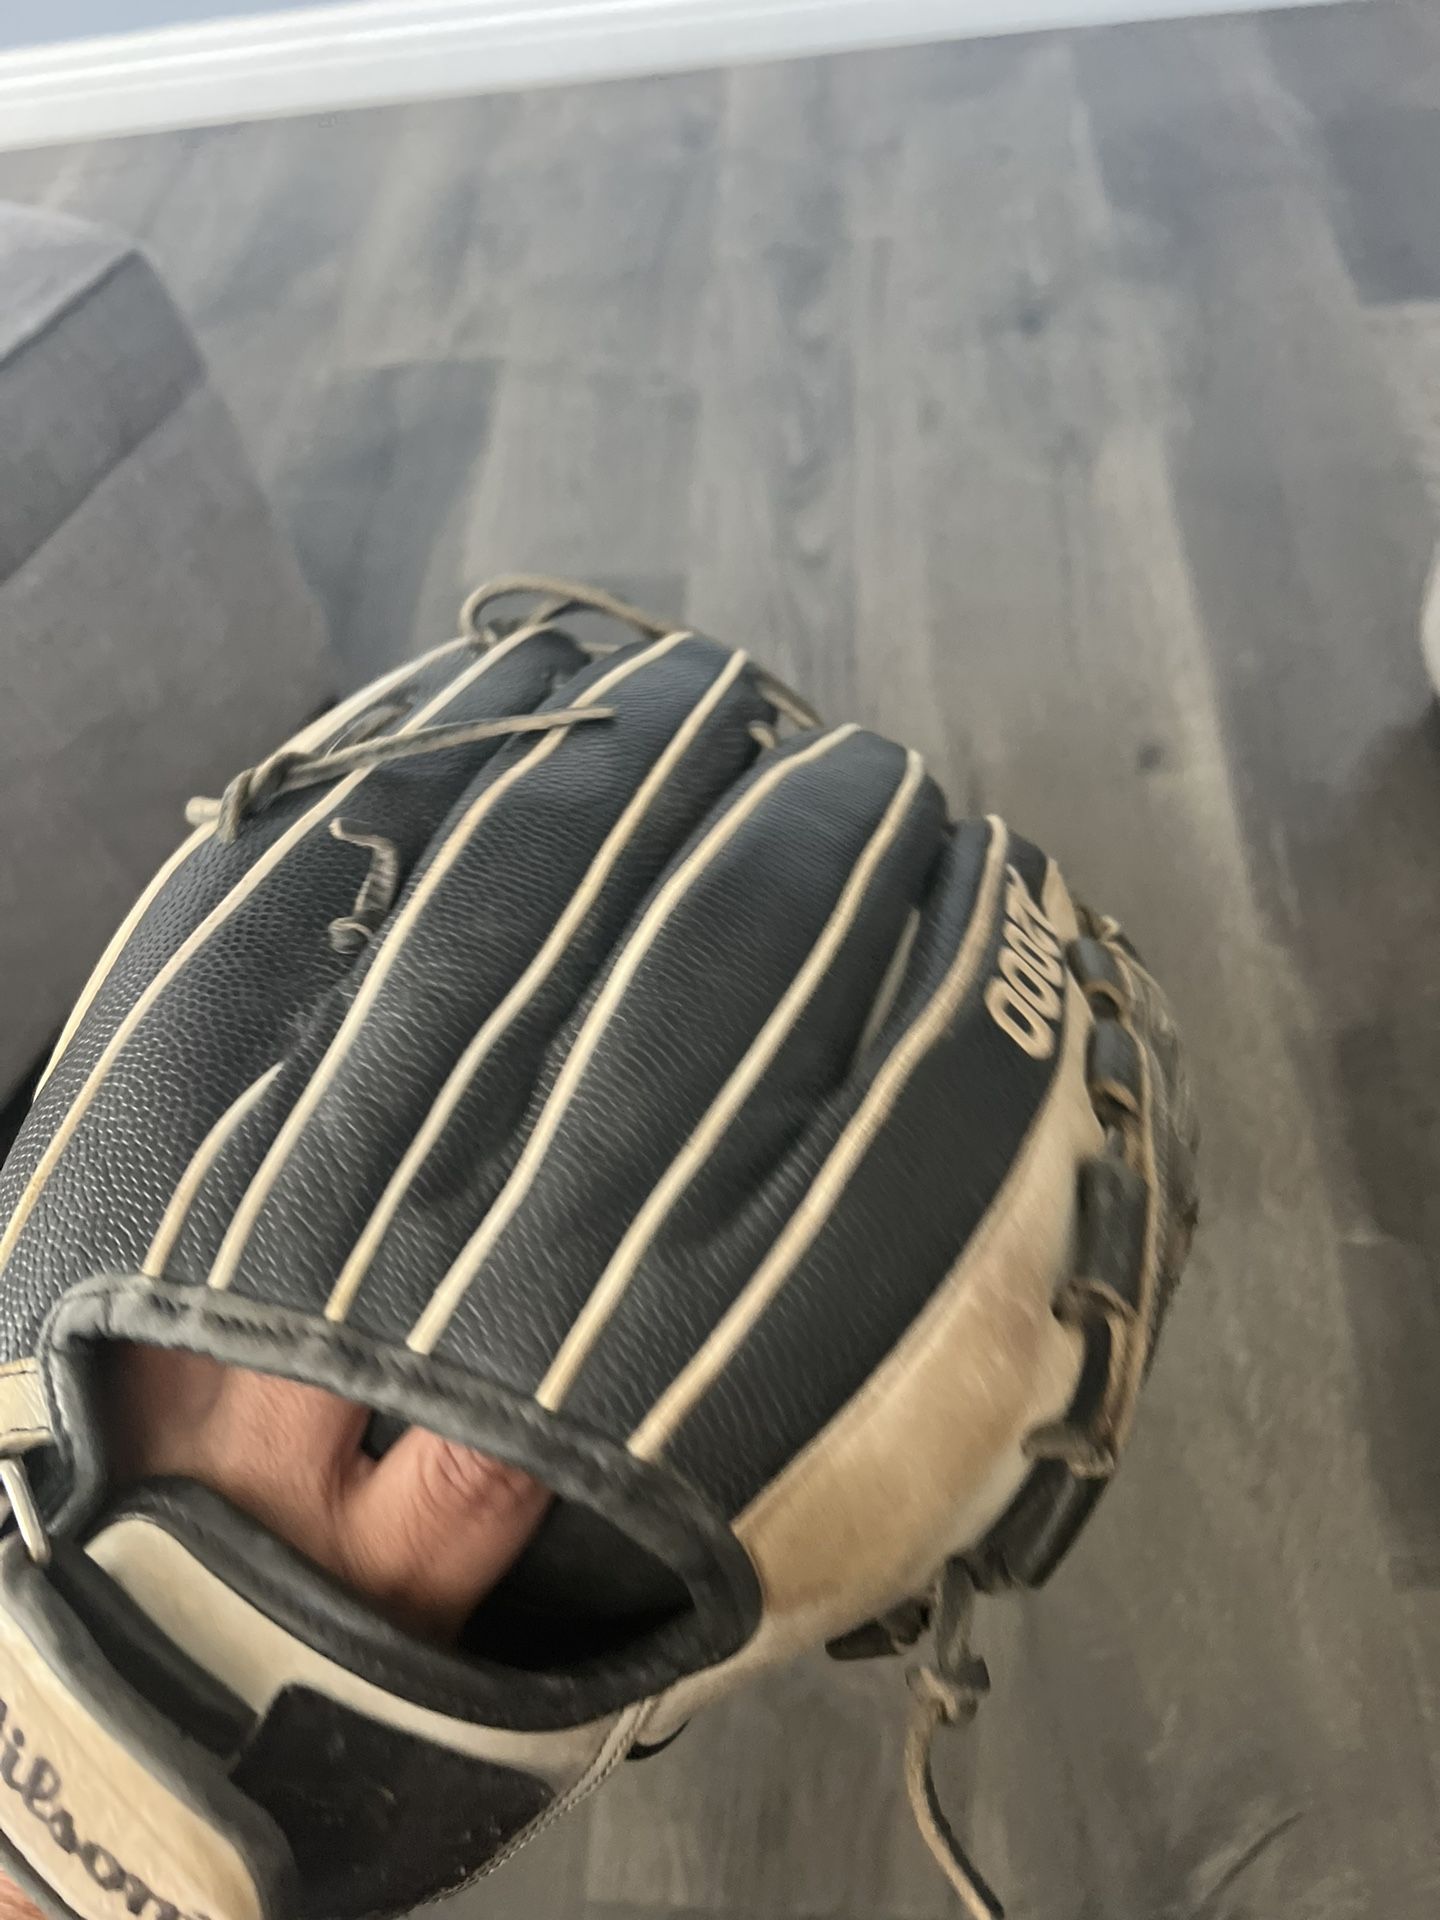 A2000 Softball glove